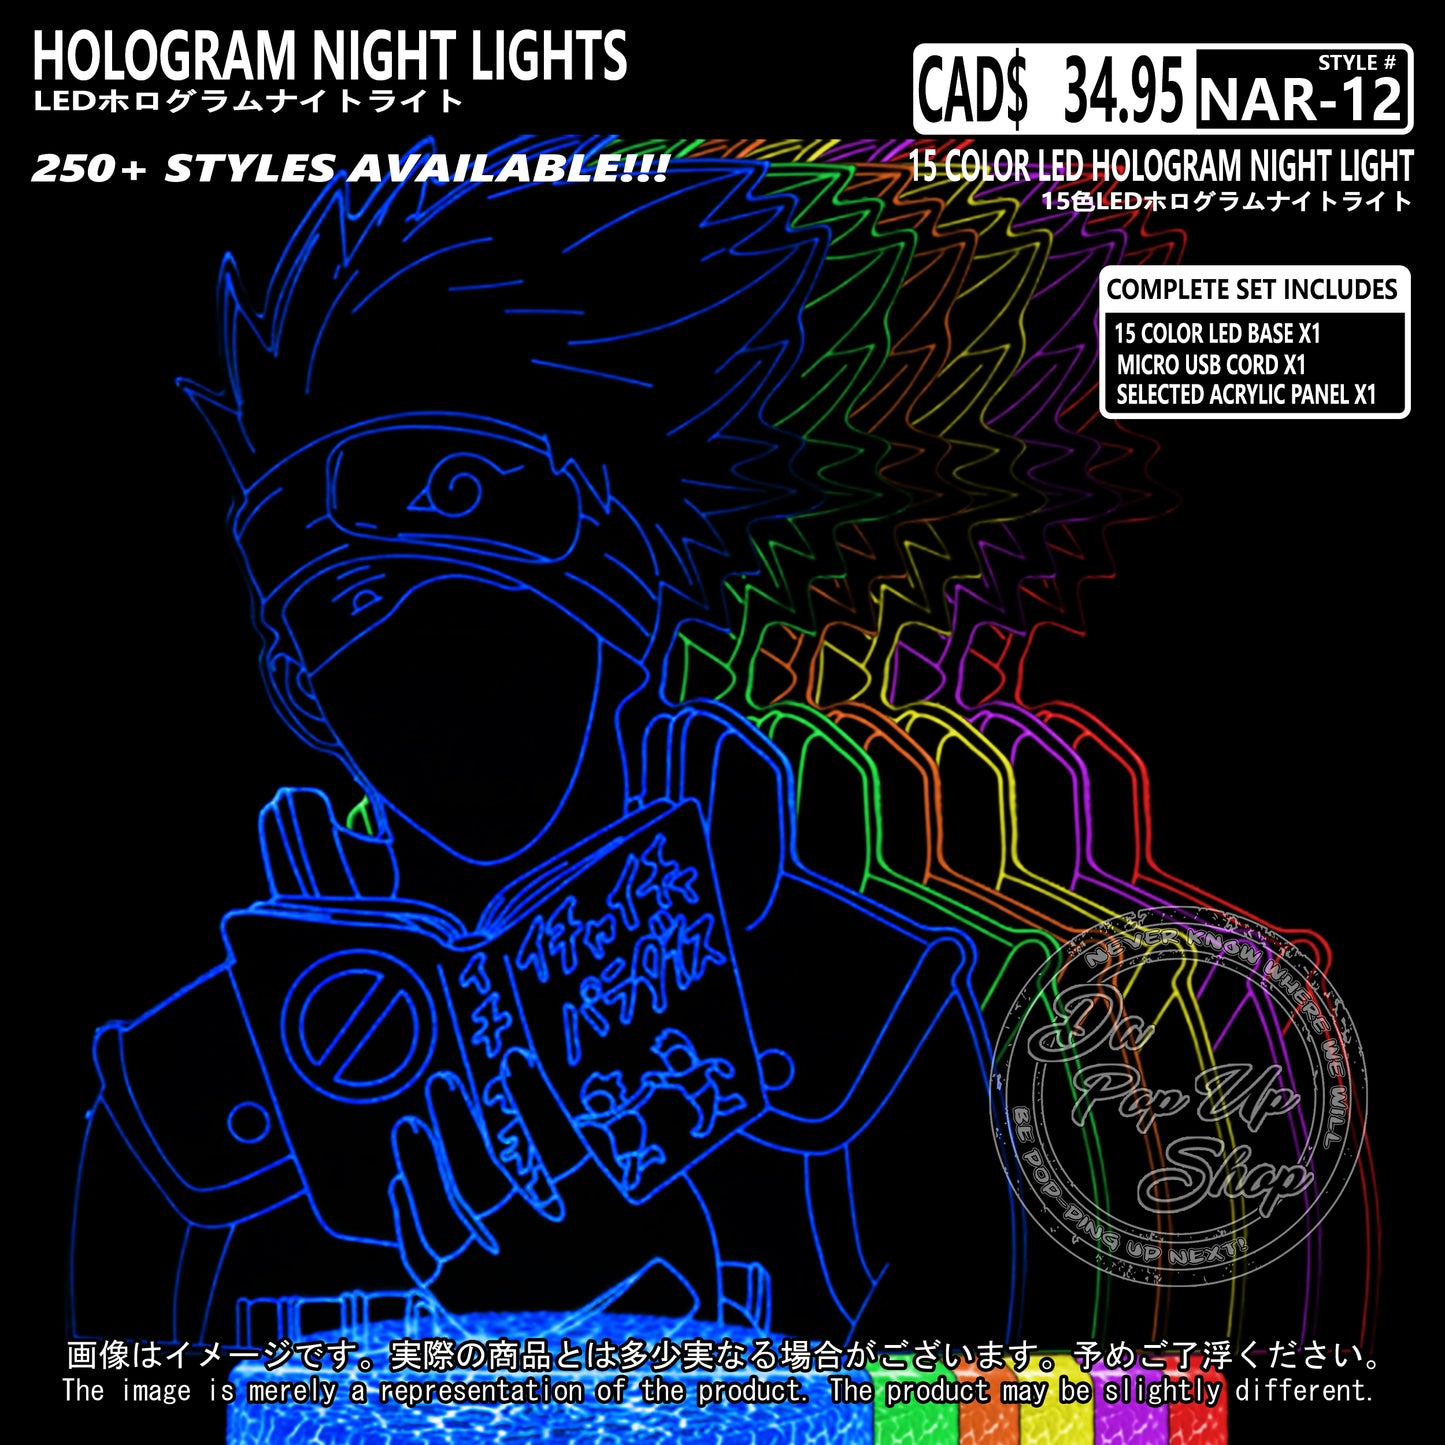 (NAR-12) Naruto Hologram LED Night Light